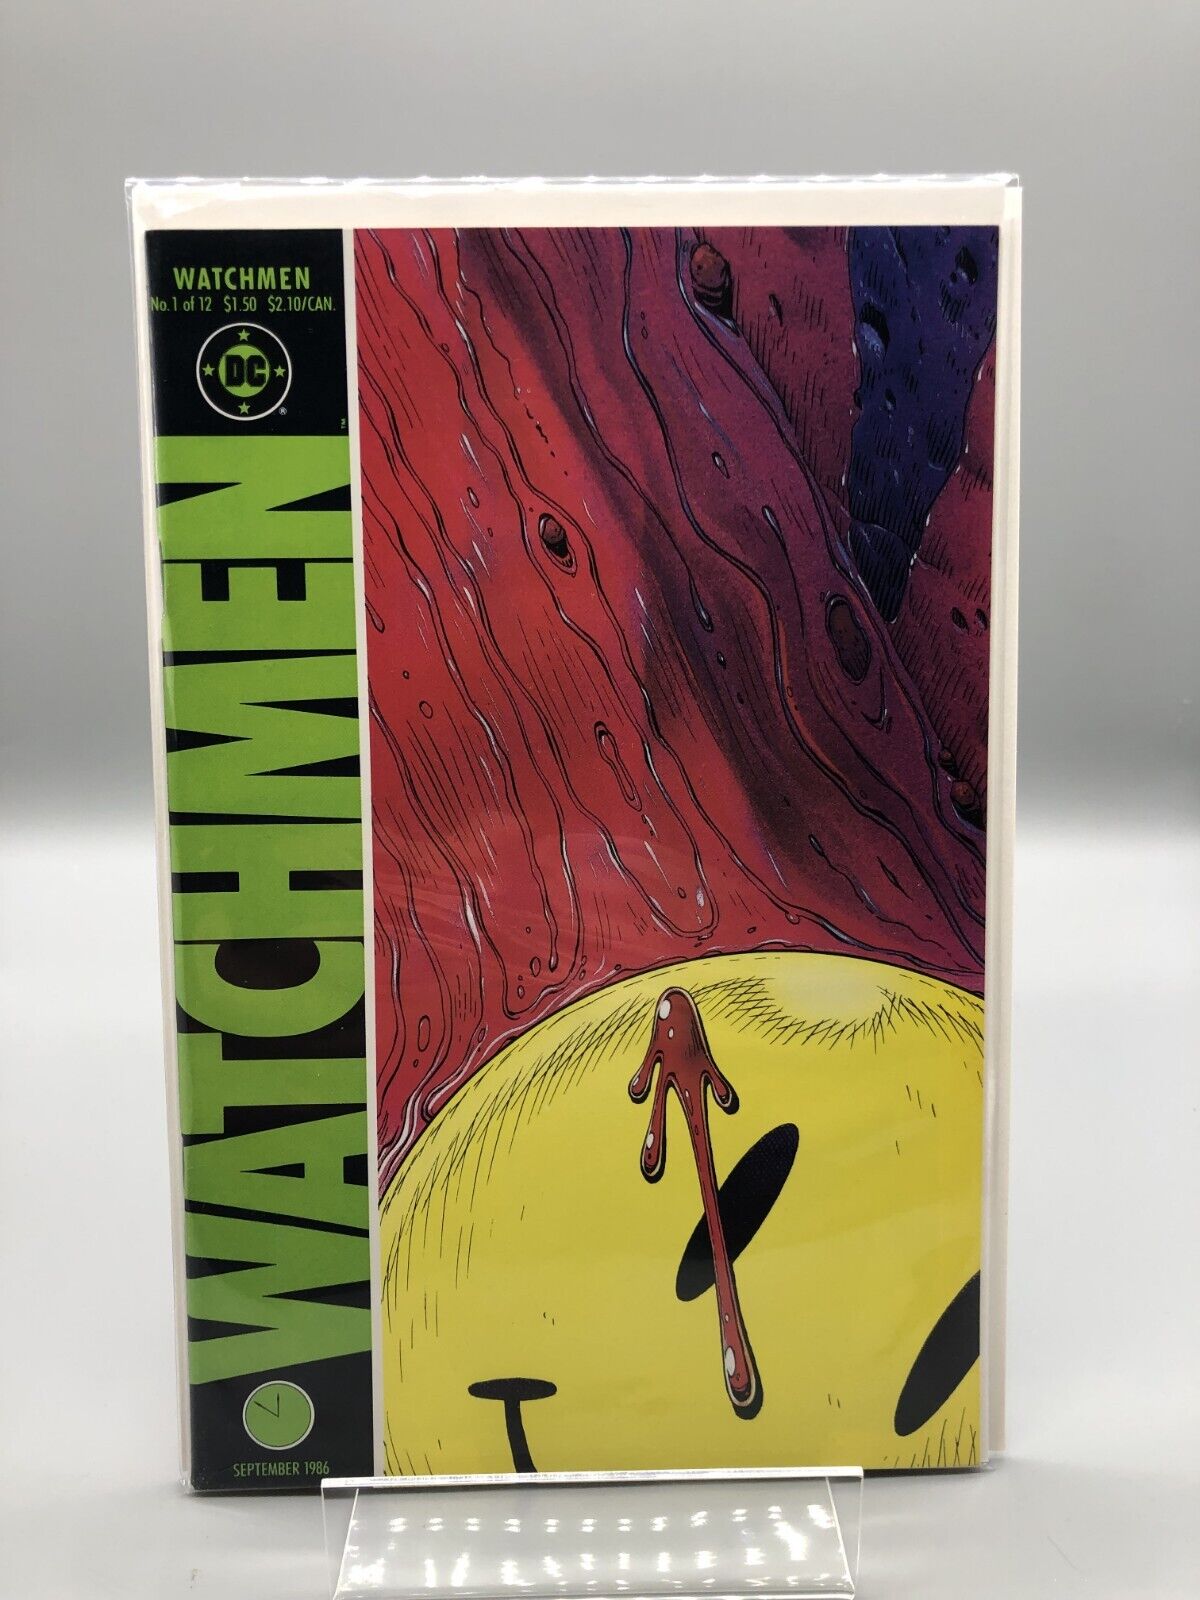 Watchman #1 DC Comics 1986 Alan Moore 9.6 - 9.8 NM/NM+